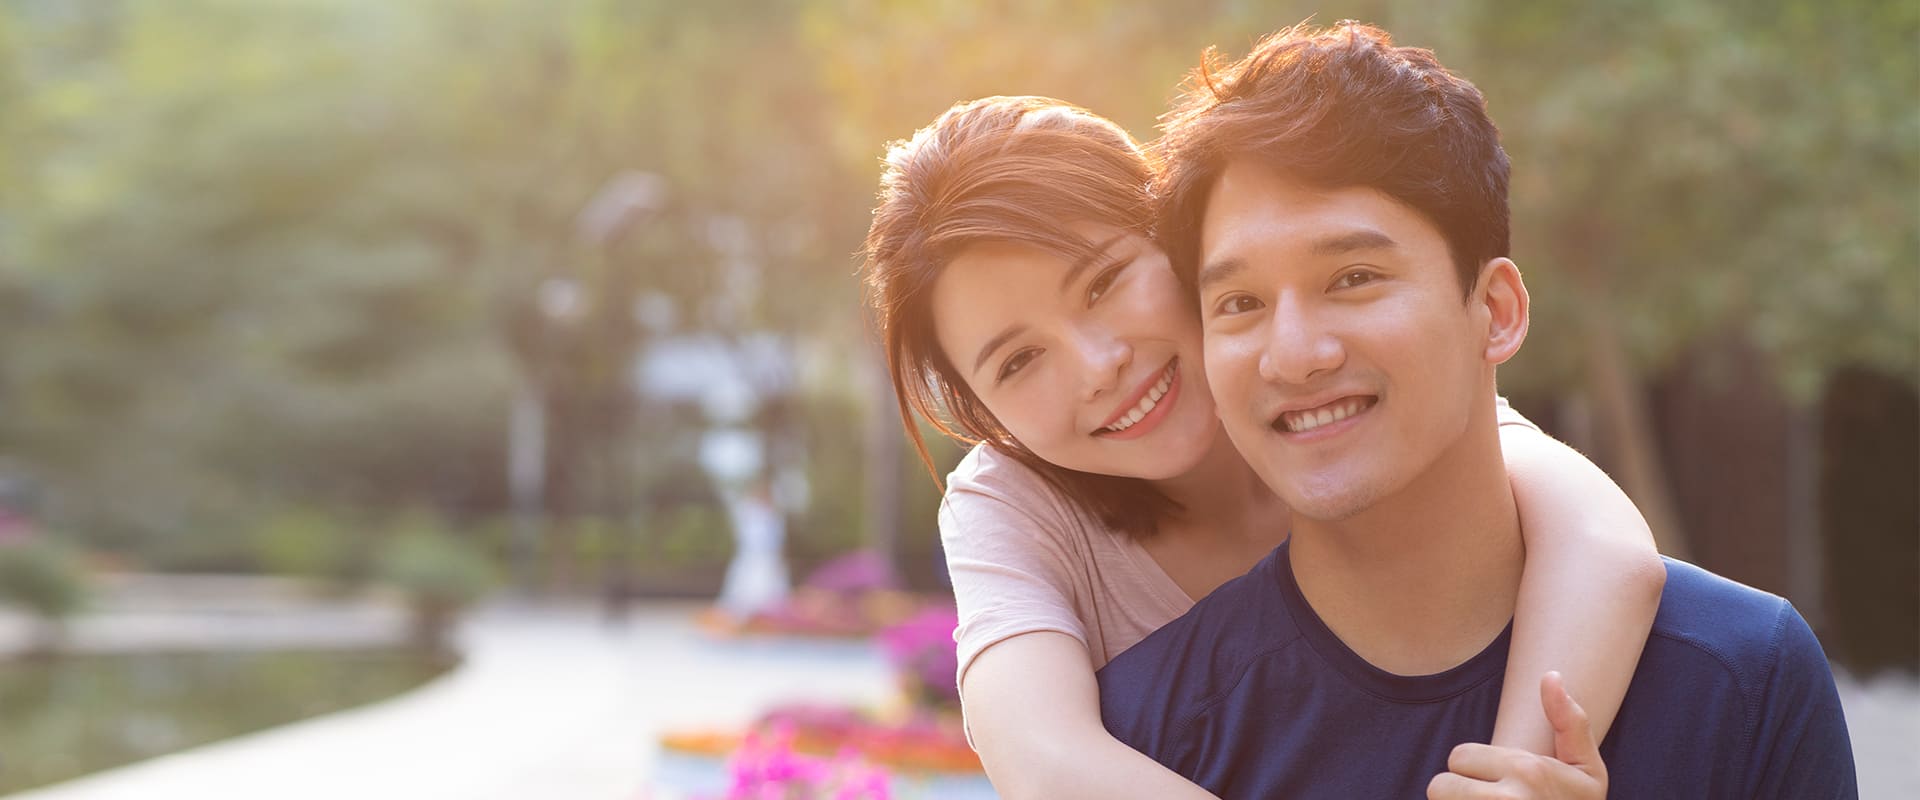 Korean dating symbolized by a korean woman hugging a korean man, both smiling at the camera